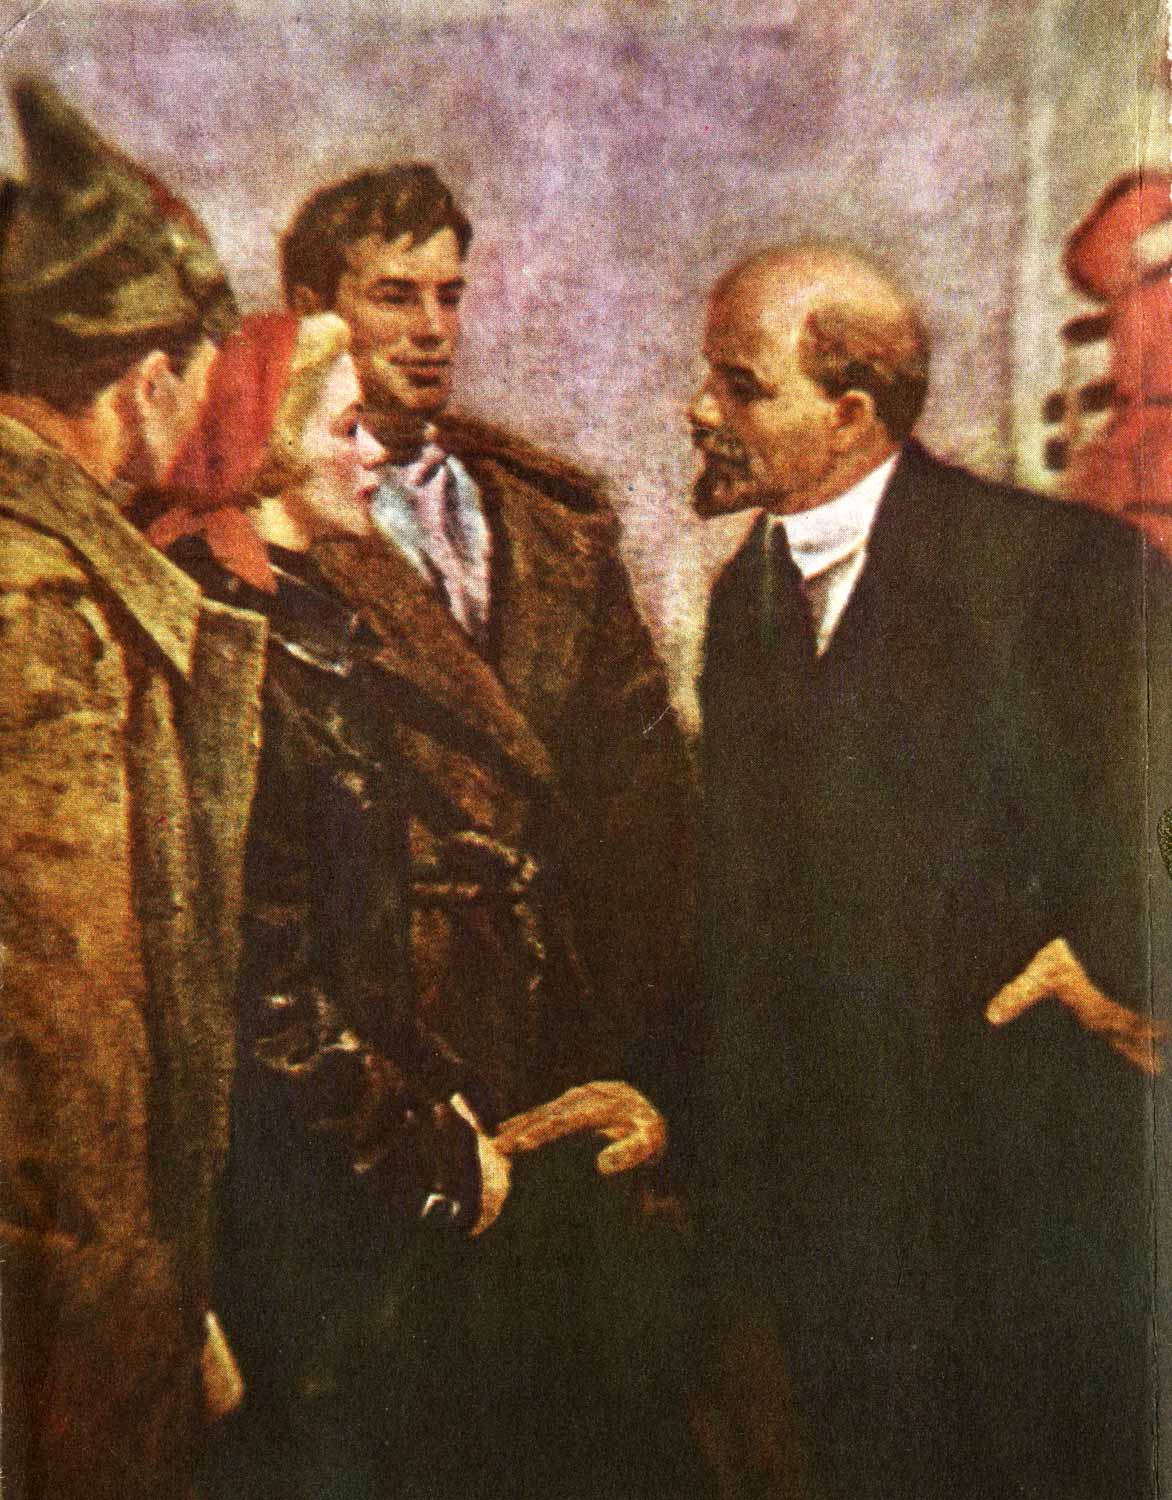 Беседа с Ильичём - картина художника А. Широкова фрагмент